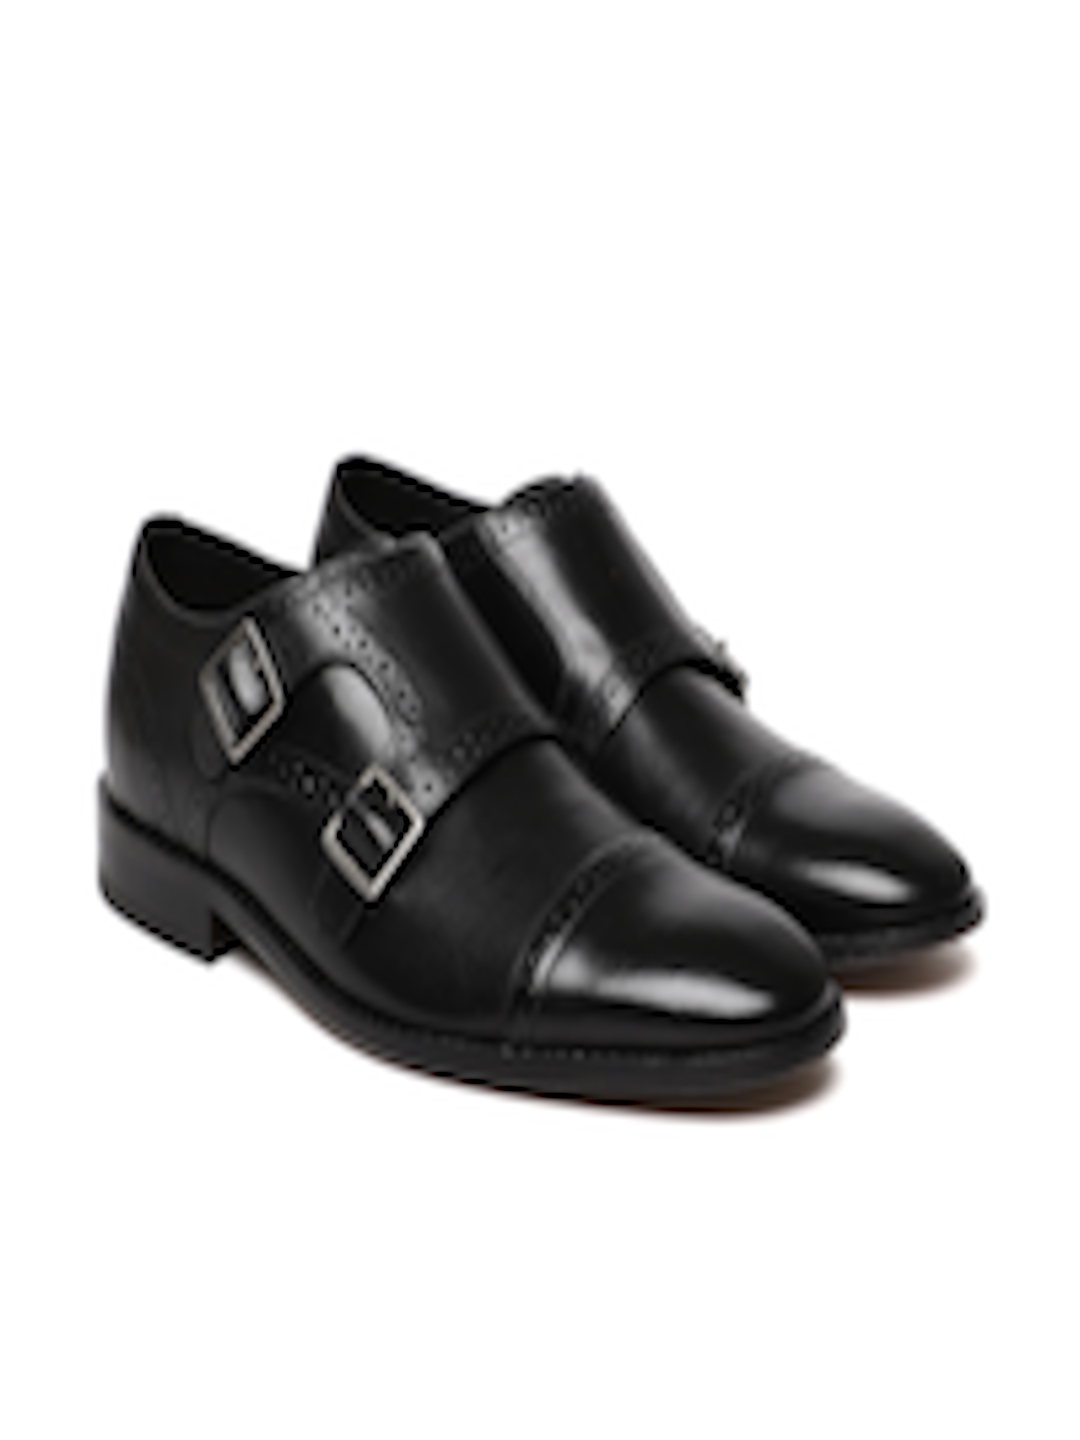 bostonian black leather dress shoes